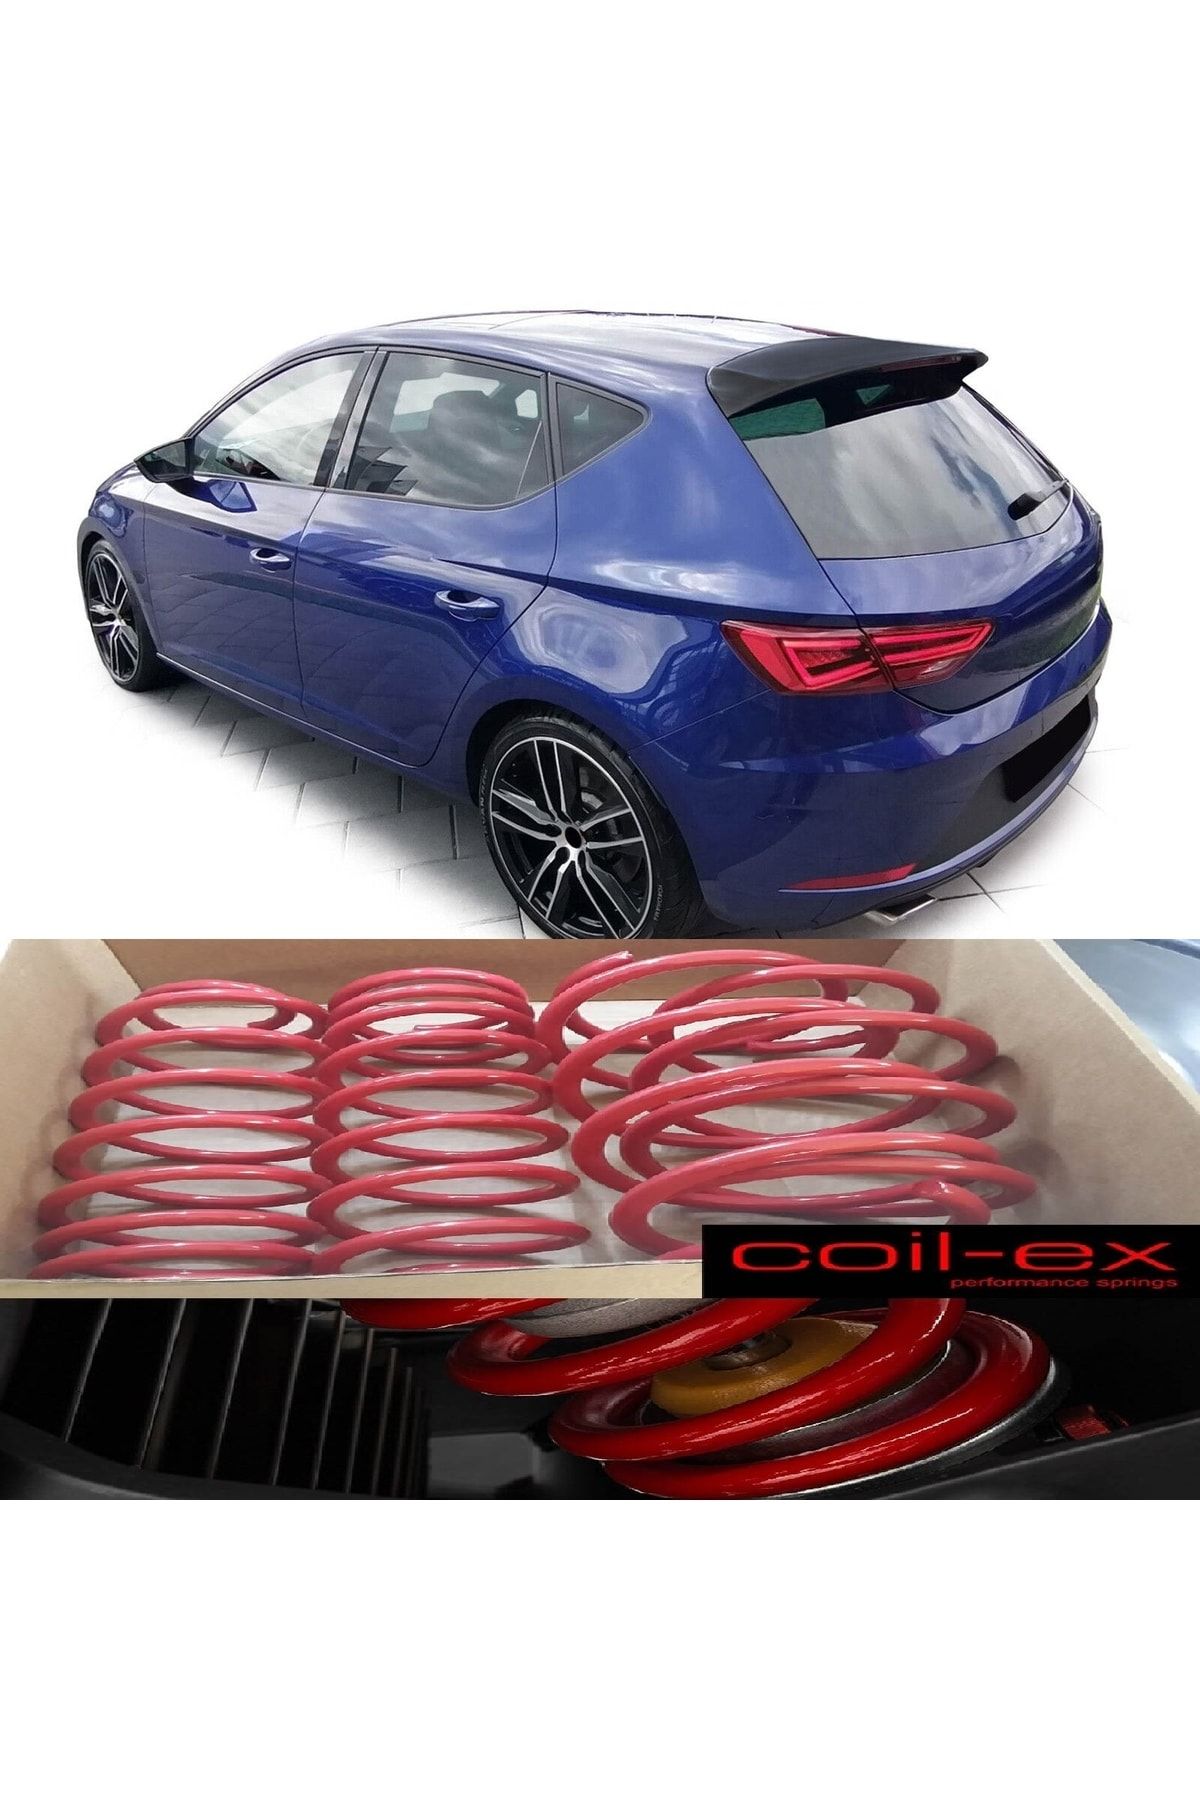 X POWER TUNİNG Seat Leon 2013-2019 5f Fr Coil-ex 4.5cm Coil Spring -  Trendyol